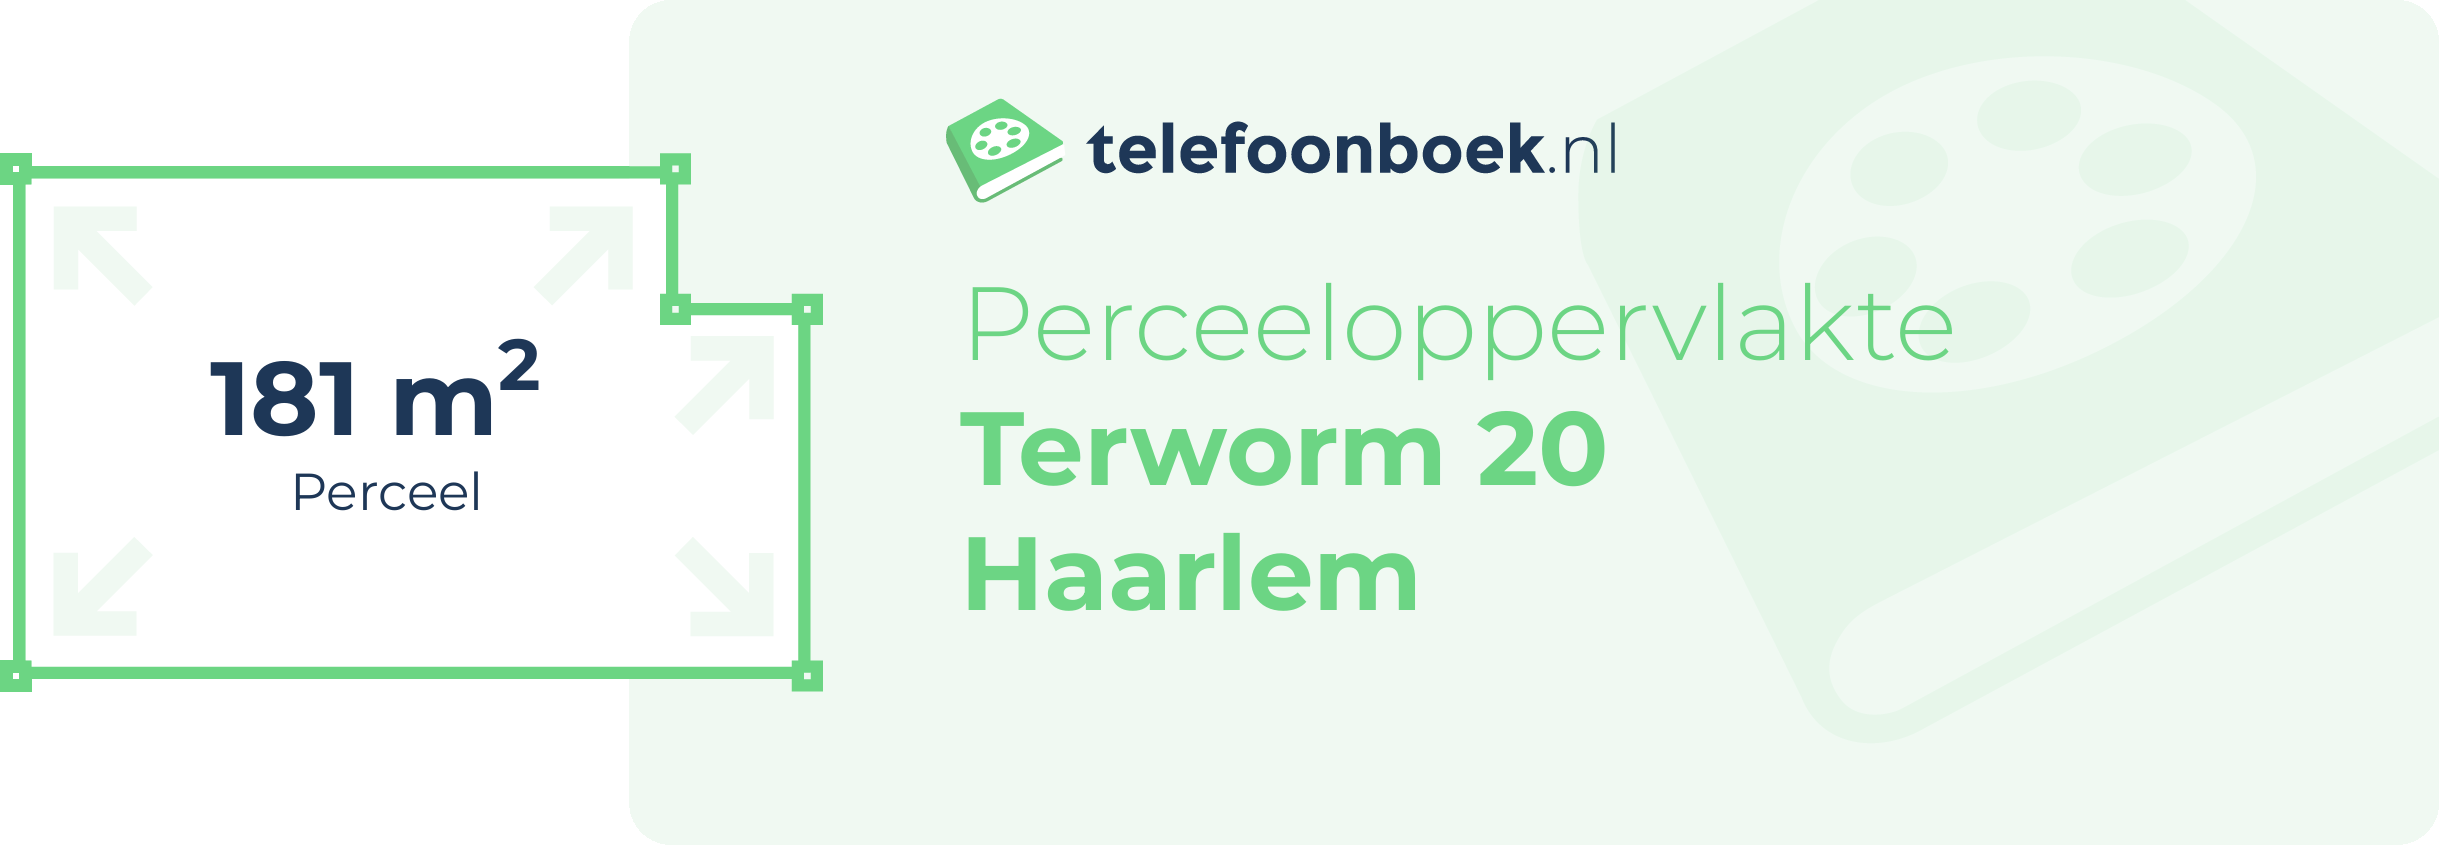 Perceeloppervlakte Terworm 20 Haarlem